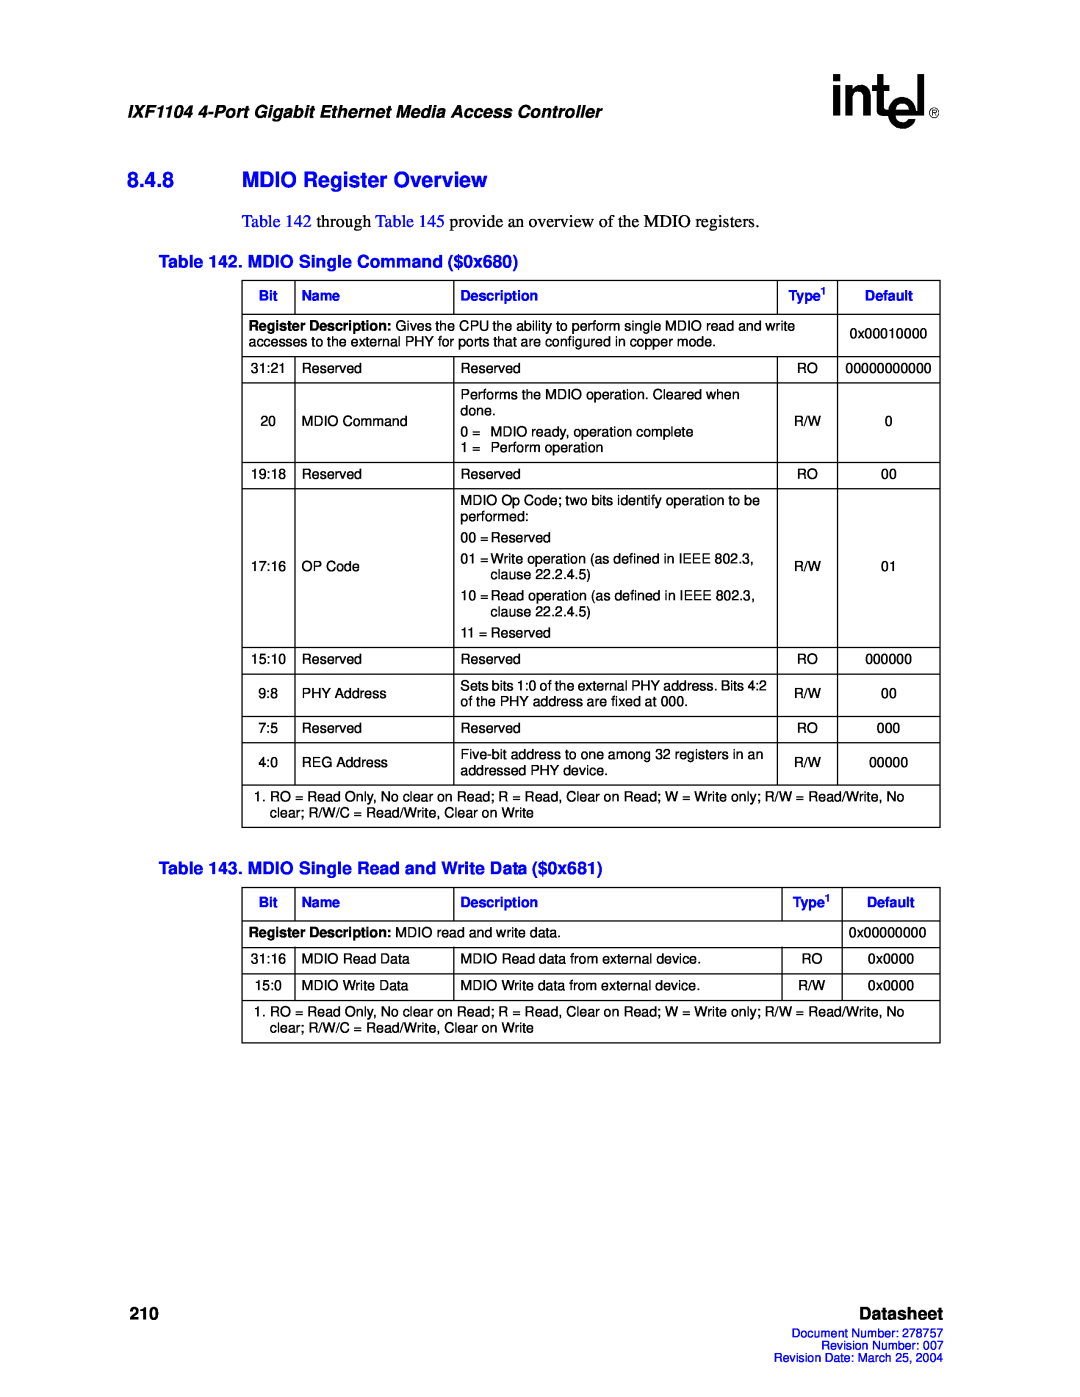 Intel IXF1104 manual 8.4.8MDIO Register Overview, Datasheet 